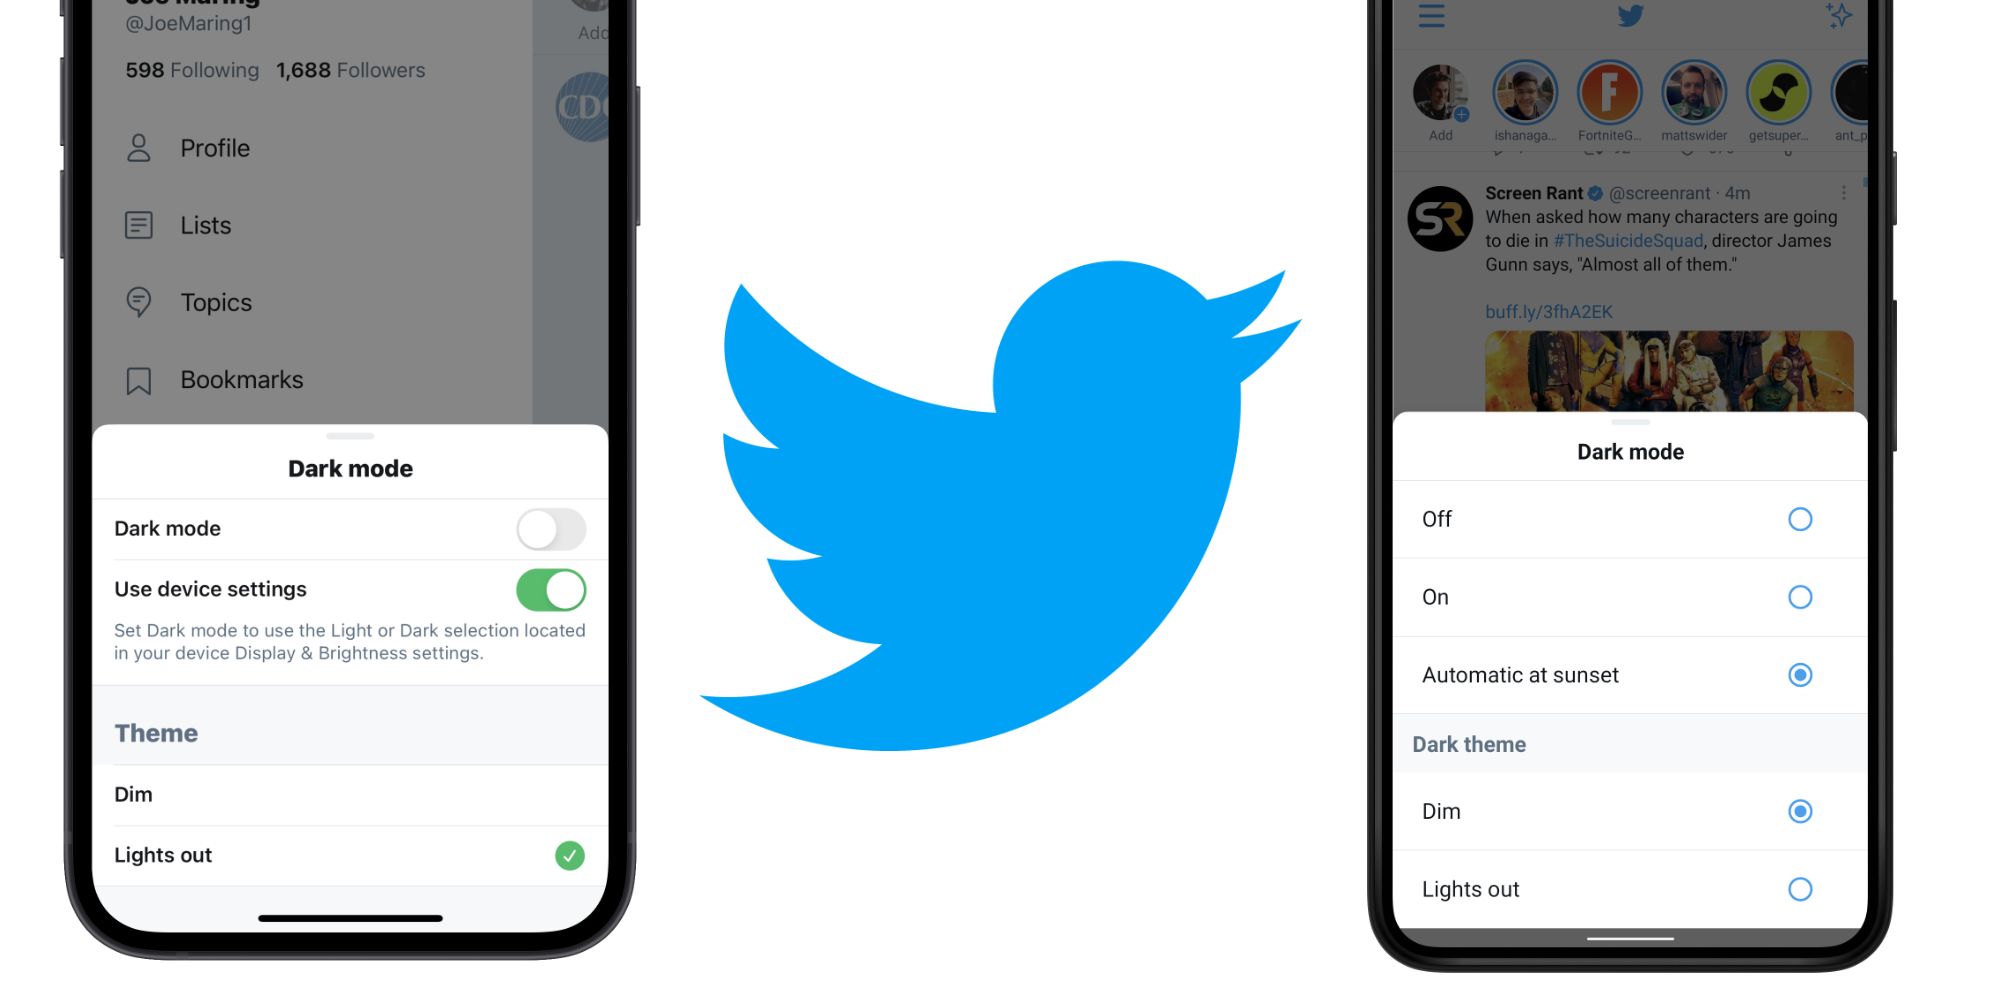 Twitter App: How To Turn On & Schedule Dark Mode